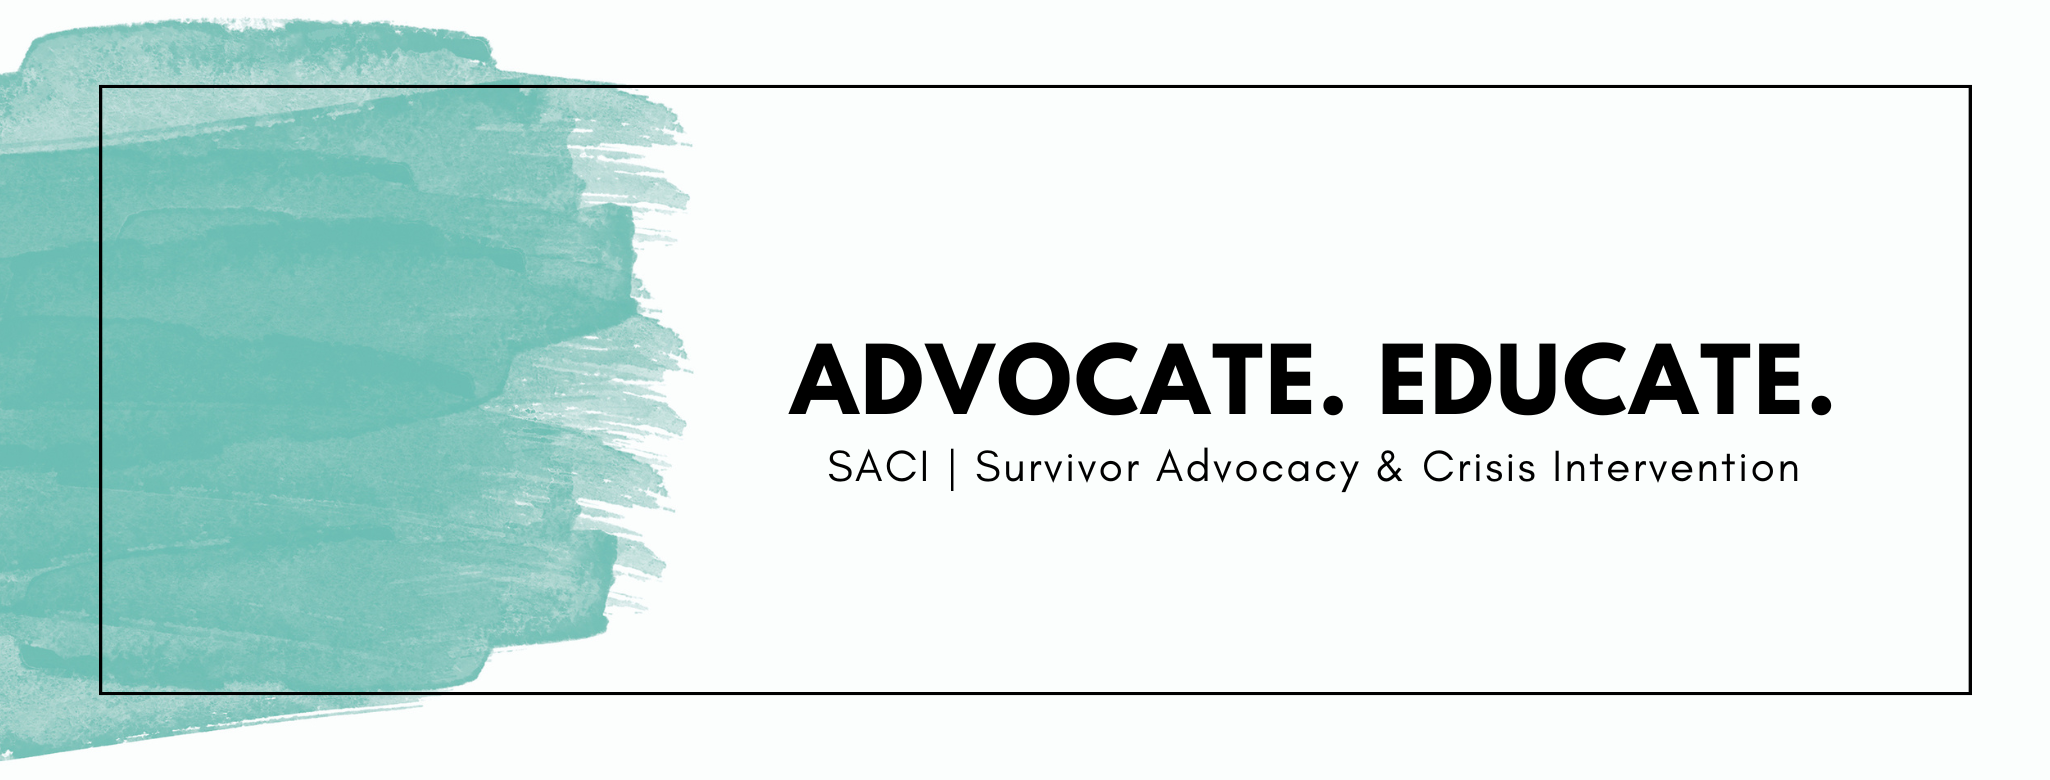 Advocate. Educate. SACI Survivor Advocacy & Crisis Intervention